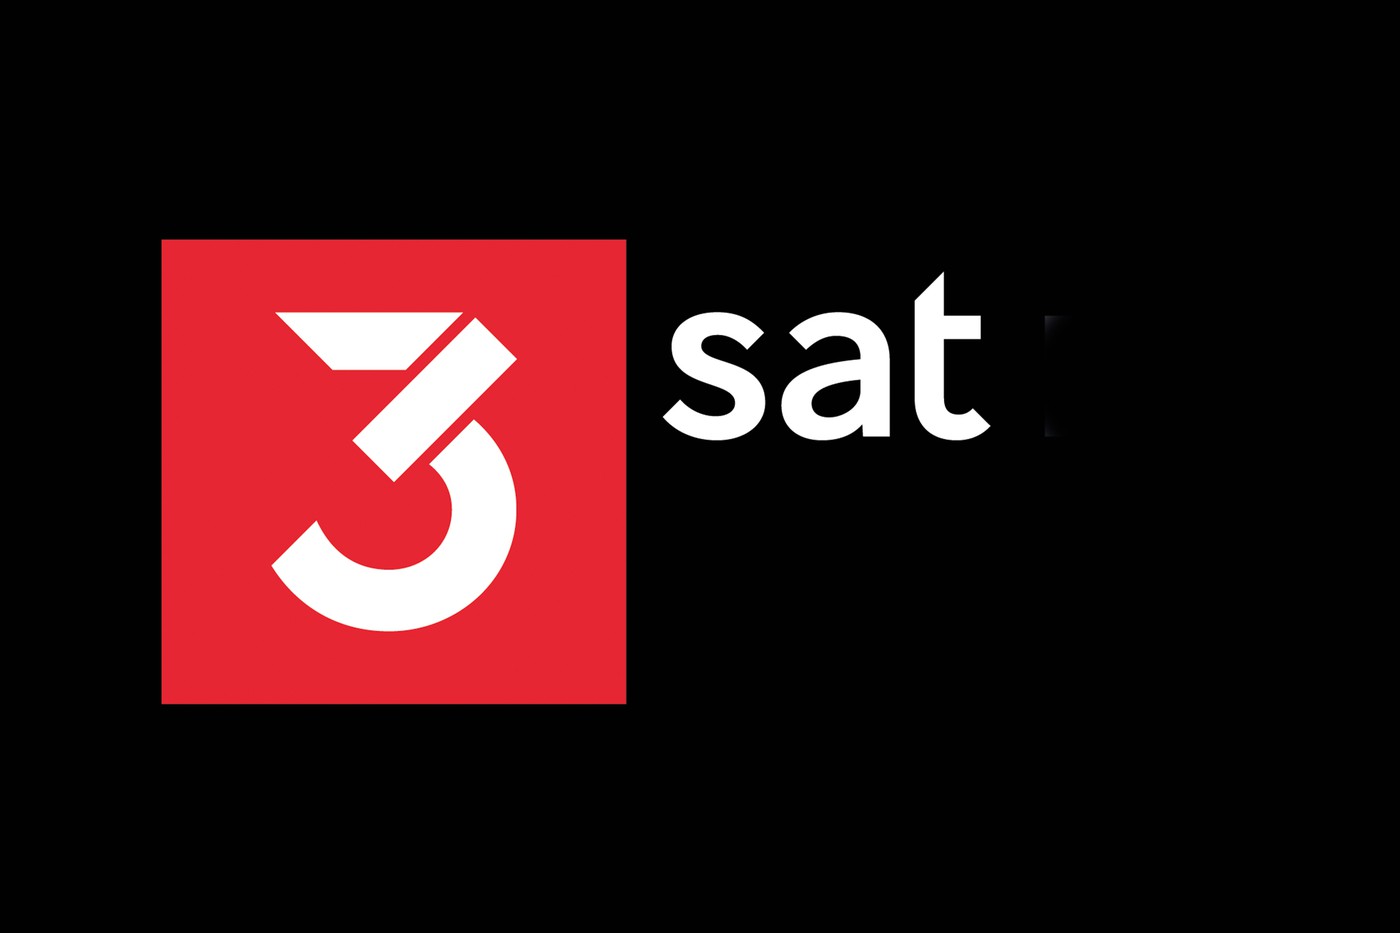 3sat neues Logo